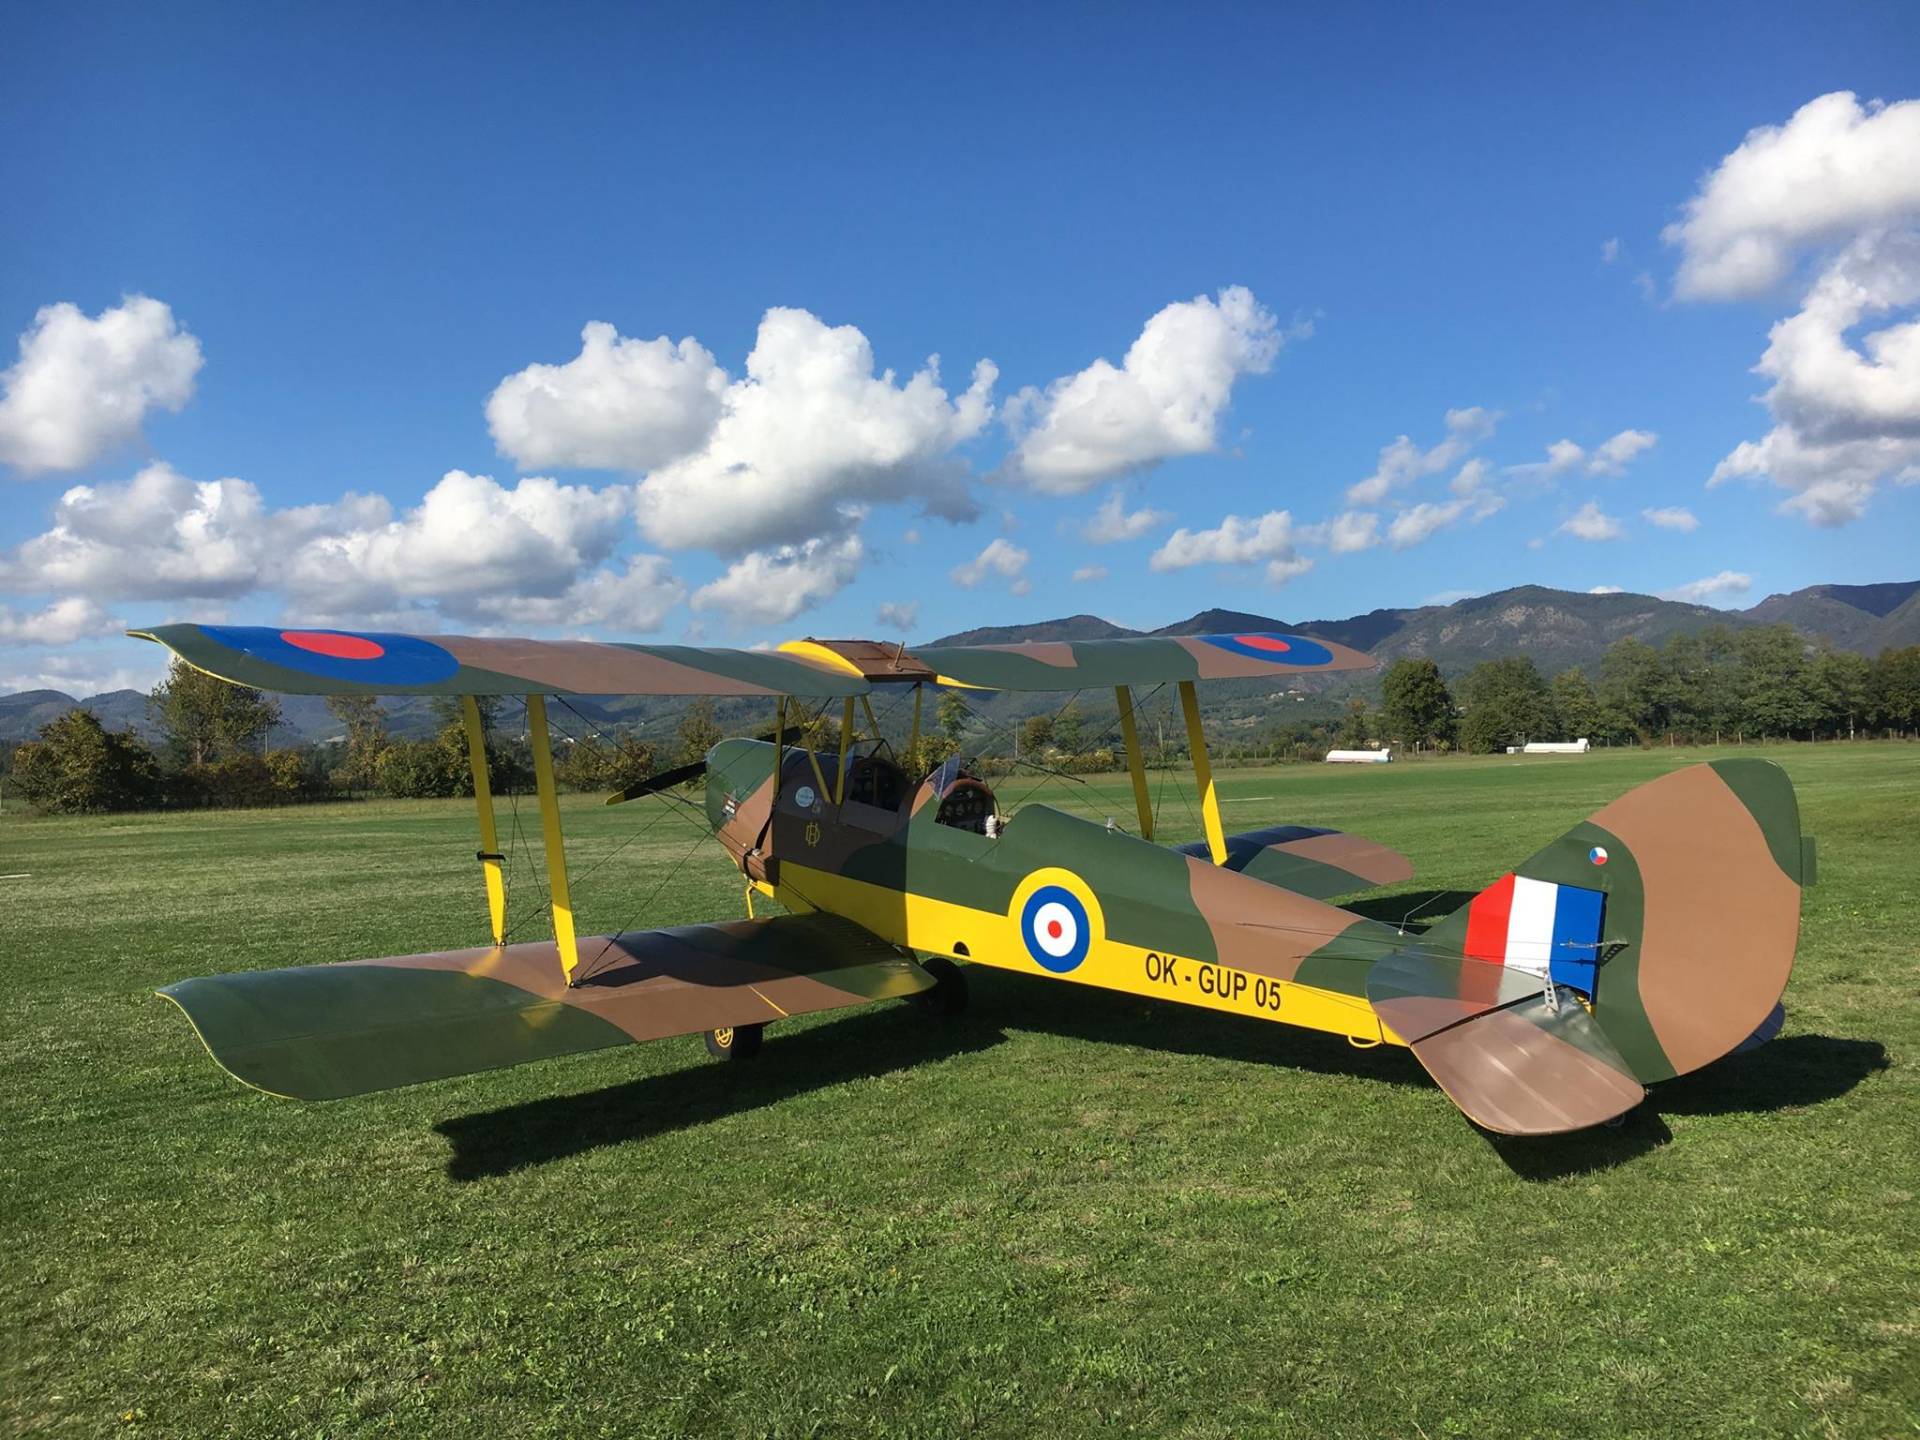 De Havilland Tiger Moth replica